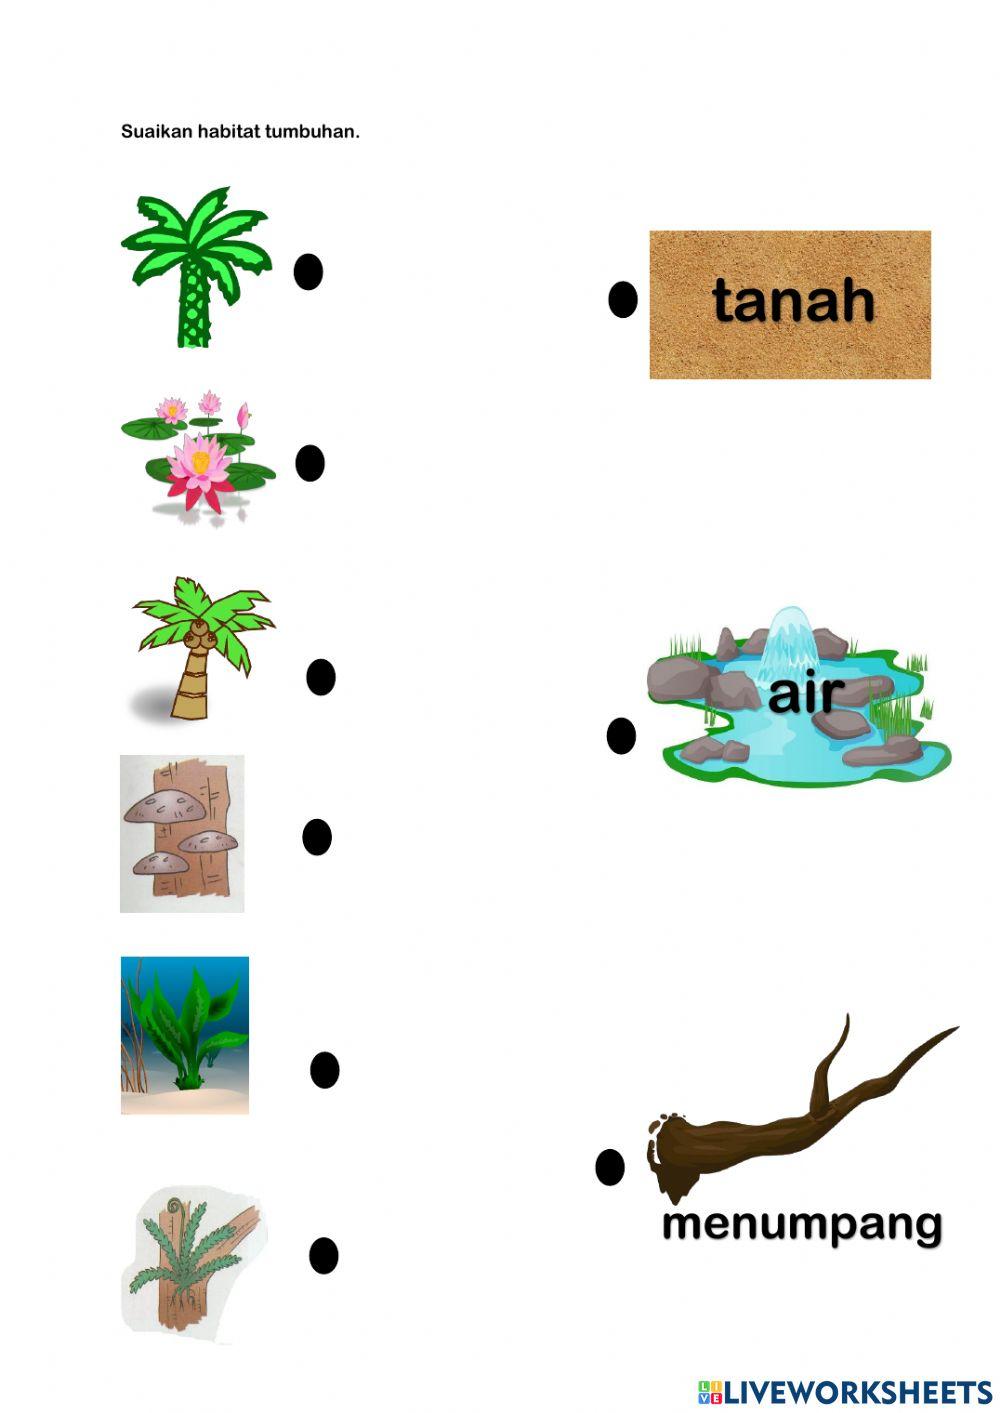 Habitat tumbuhan